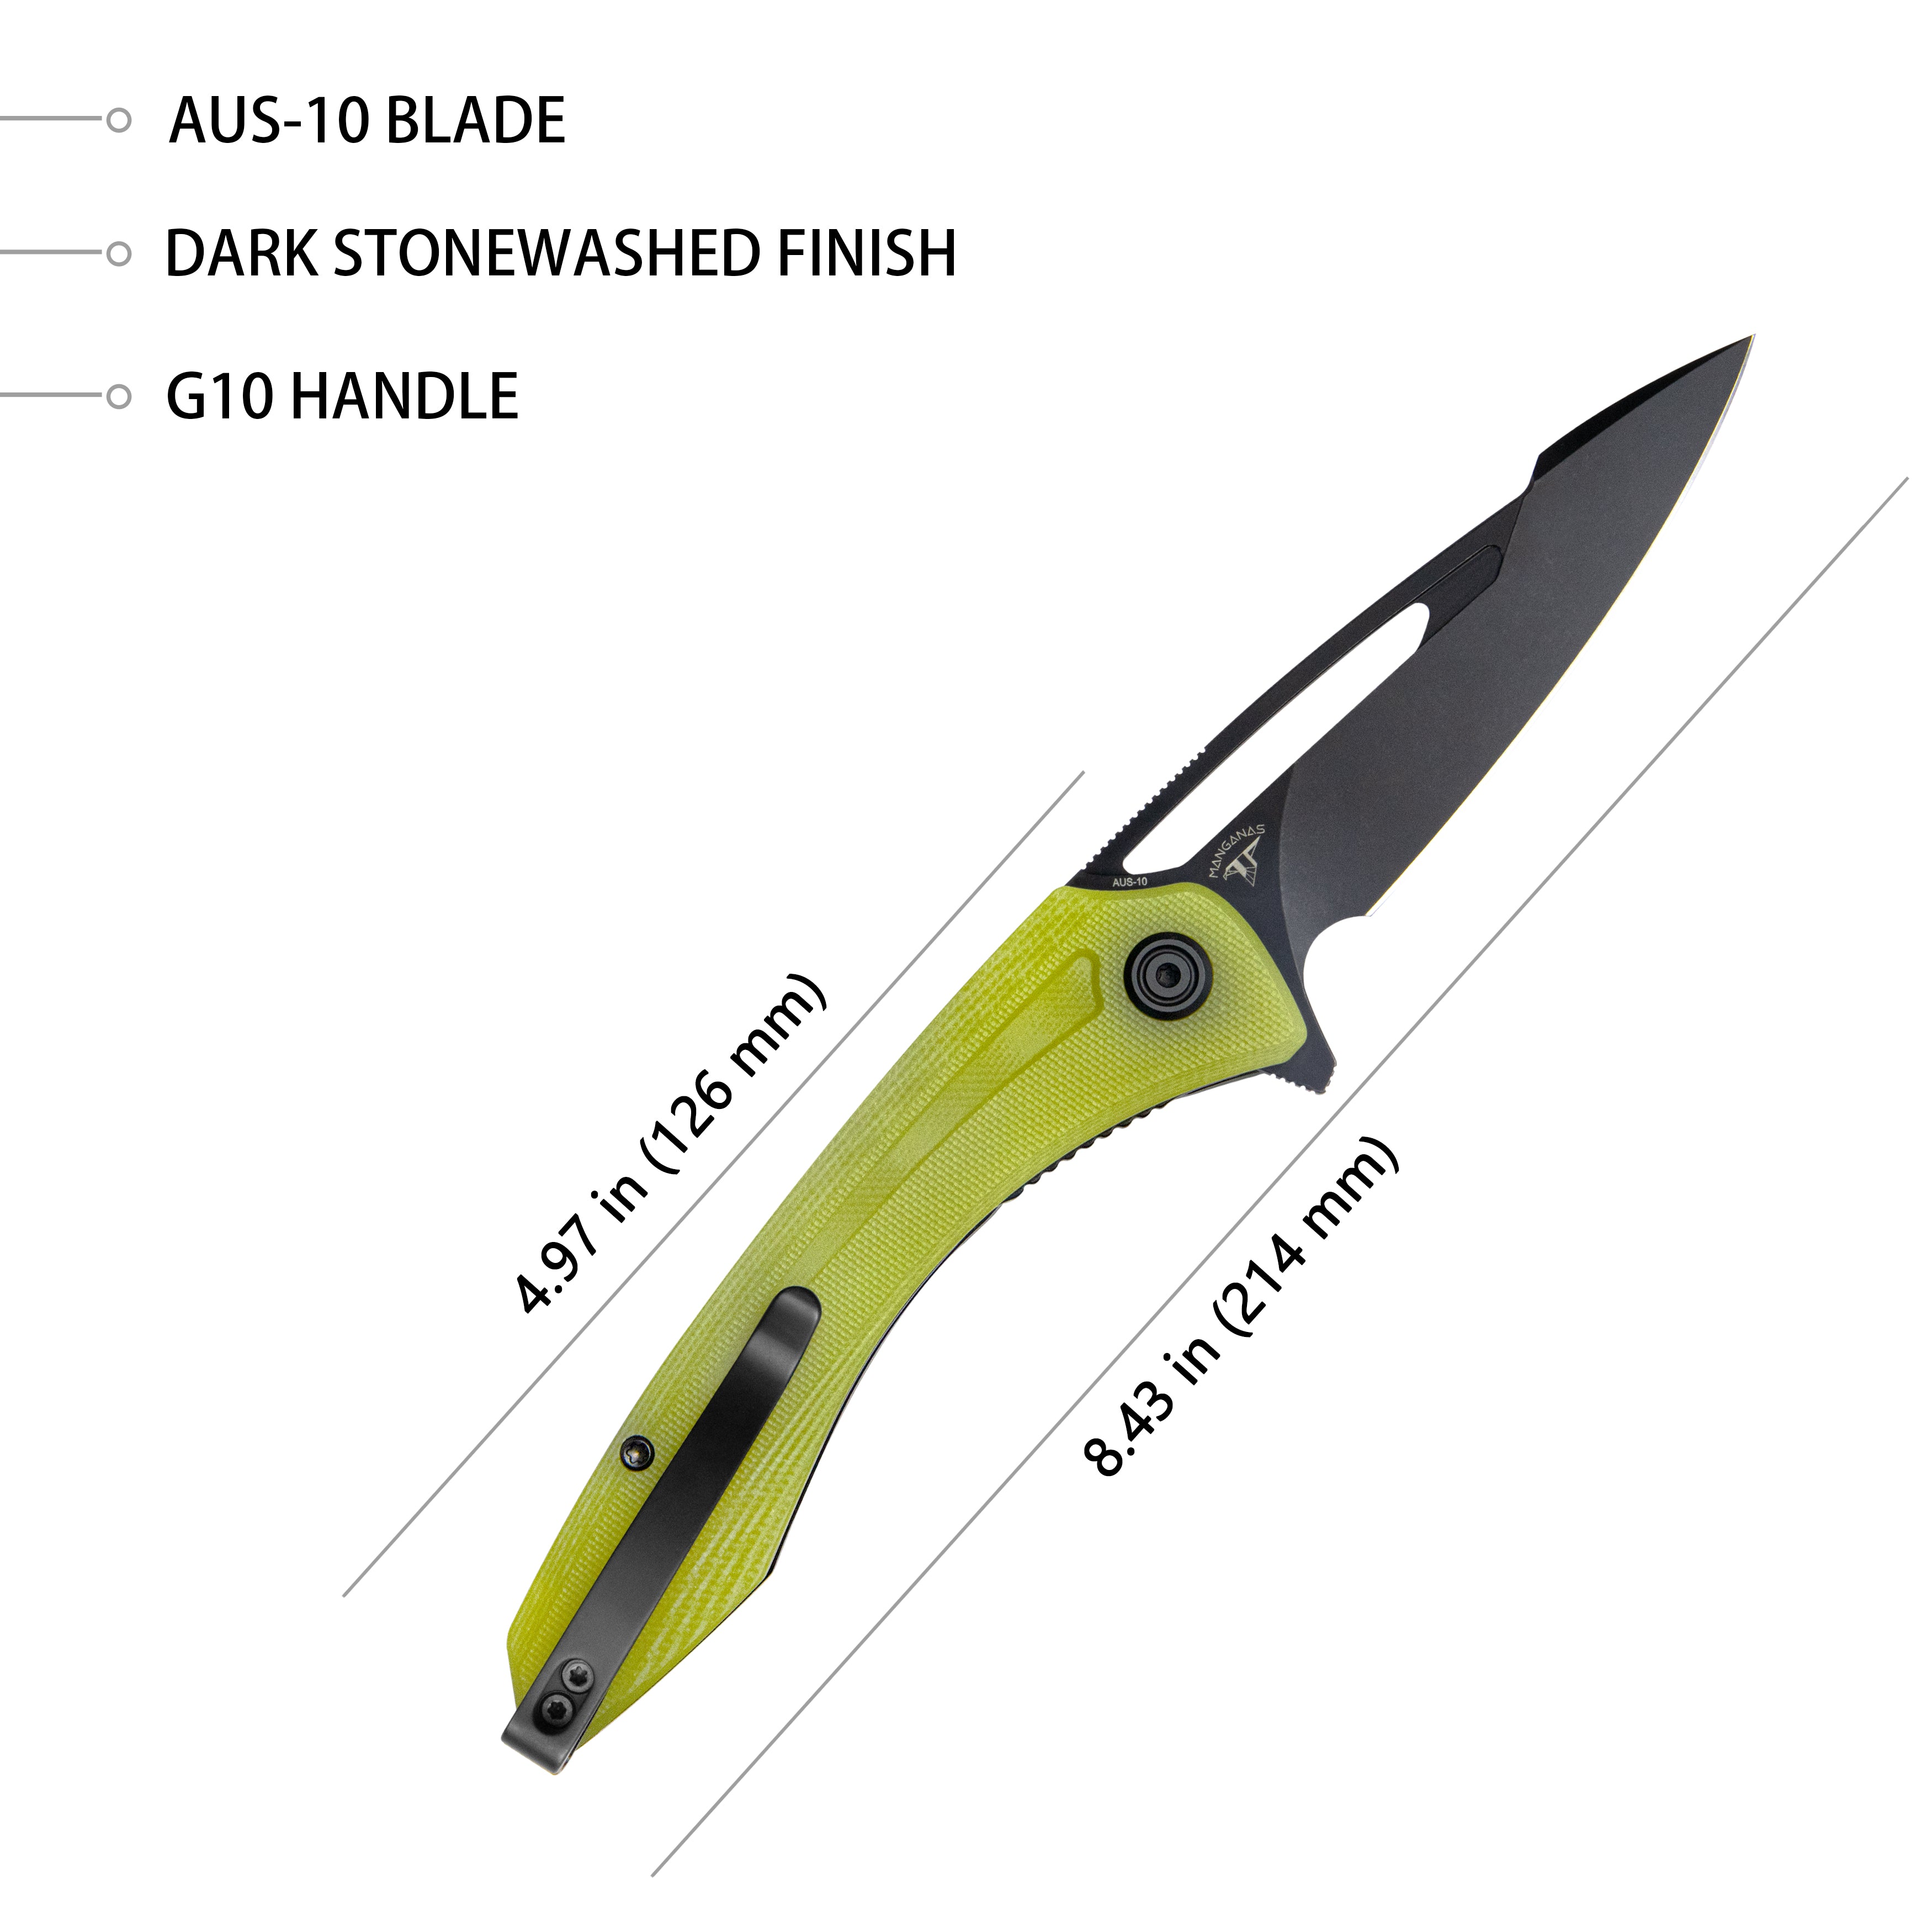 Kubey Merced Klappmesser Folding Knife 3.46" Blackwash AUS-10 Blade With Durable Translucent Yellow G10 Handle Reliable Tactical Pocket Knife KU345C